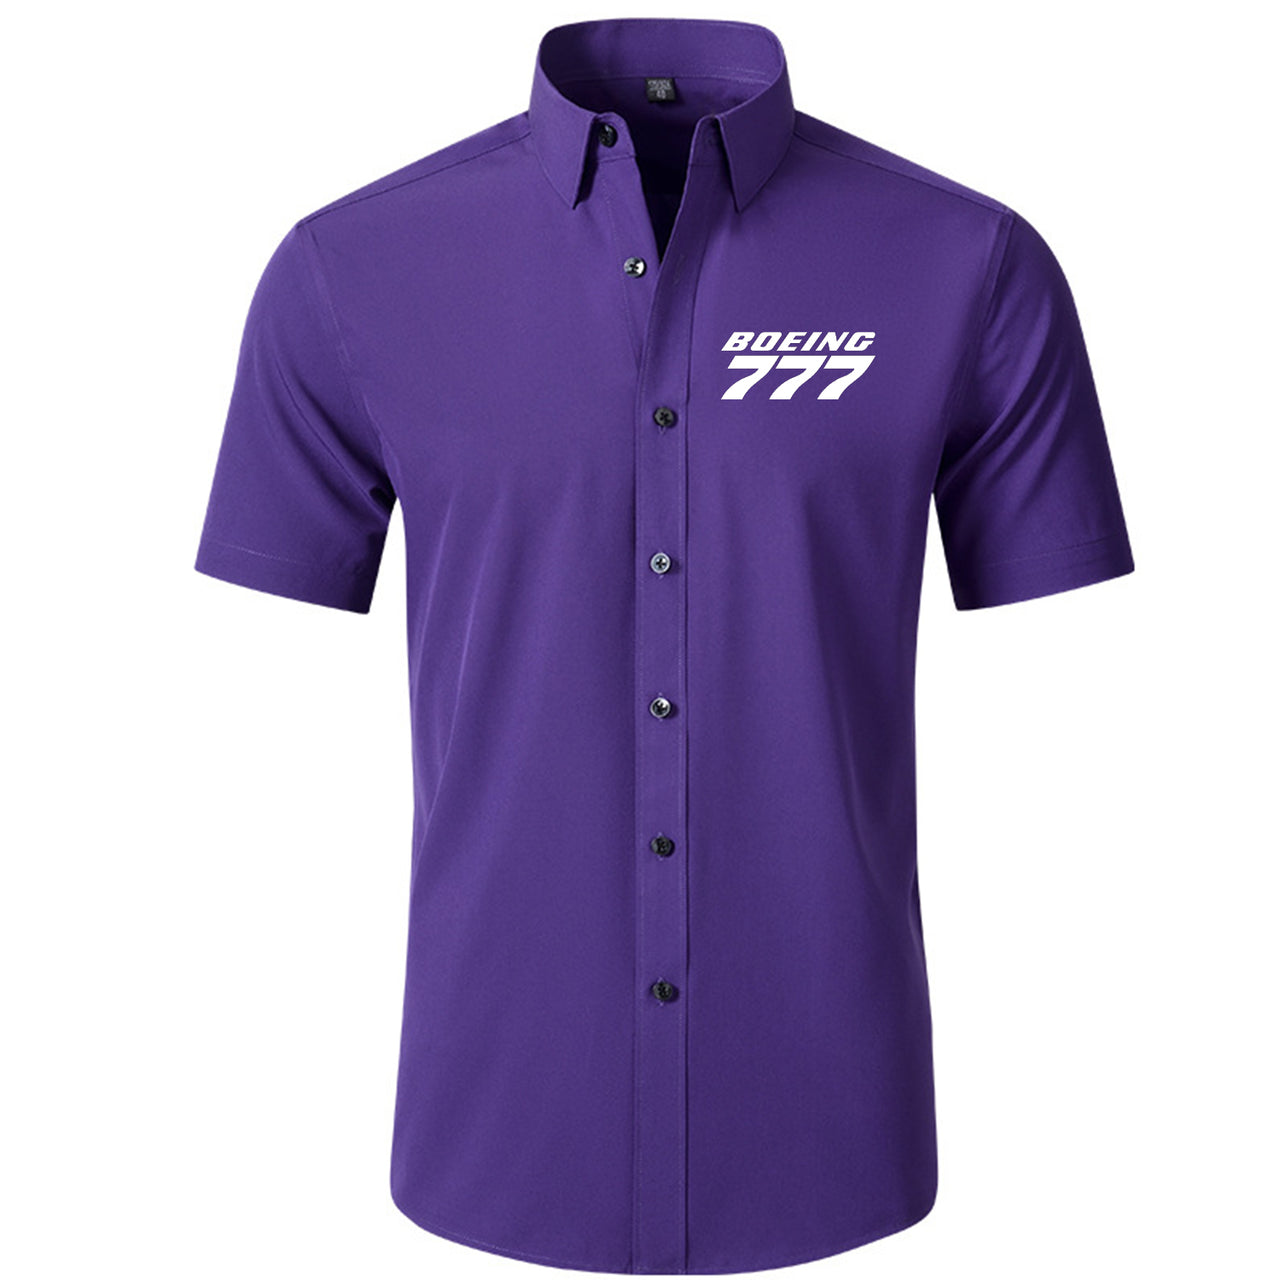 Boeing 777 & Text Designed Short Sleeve Shirts